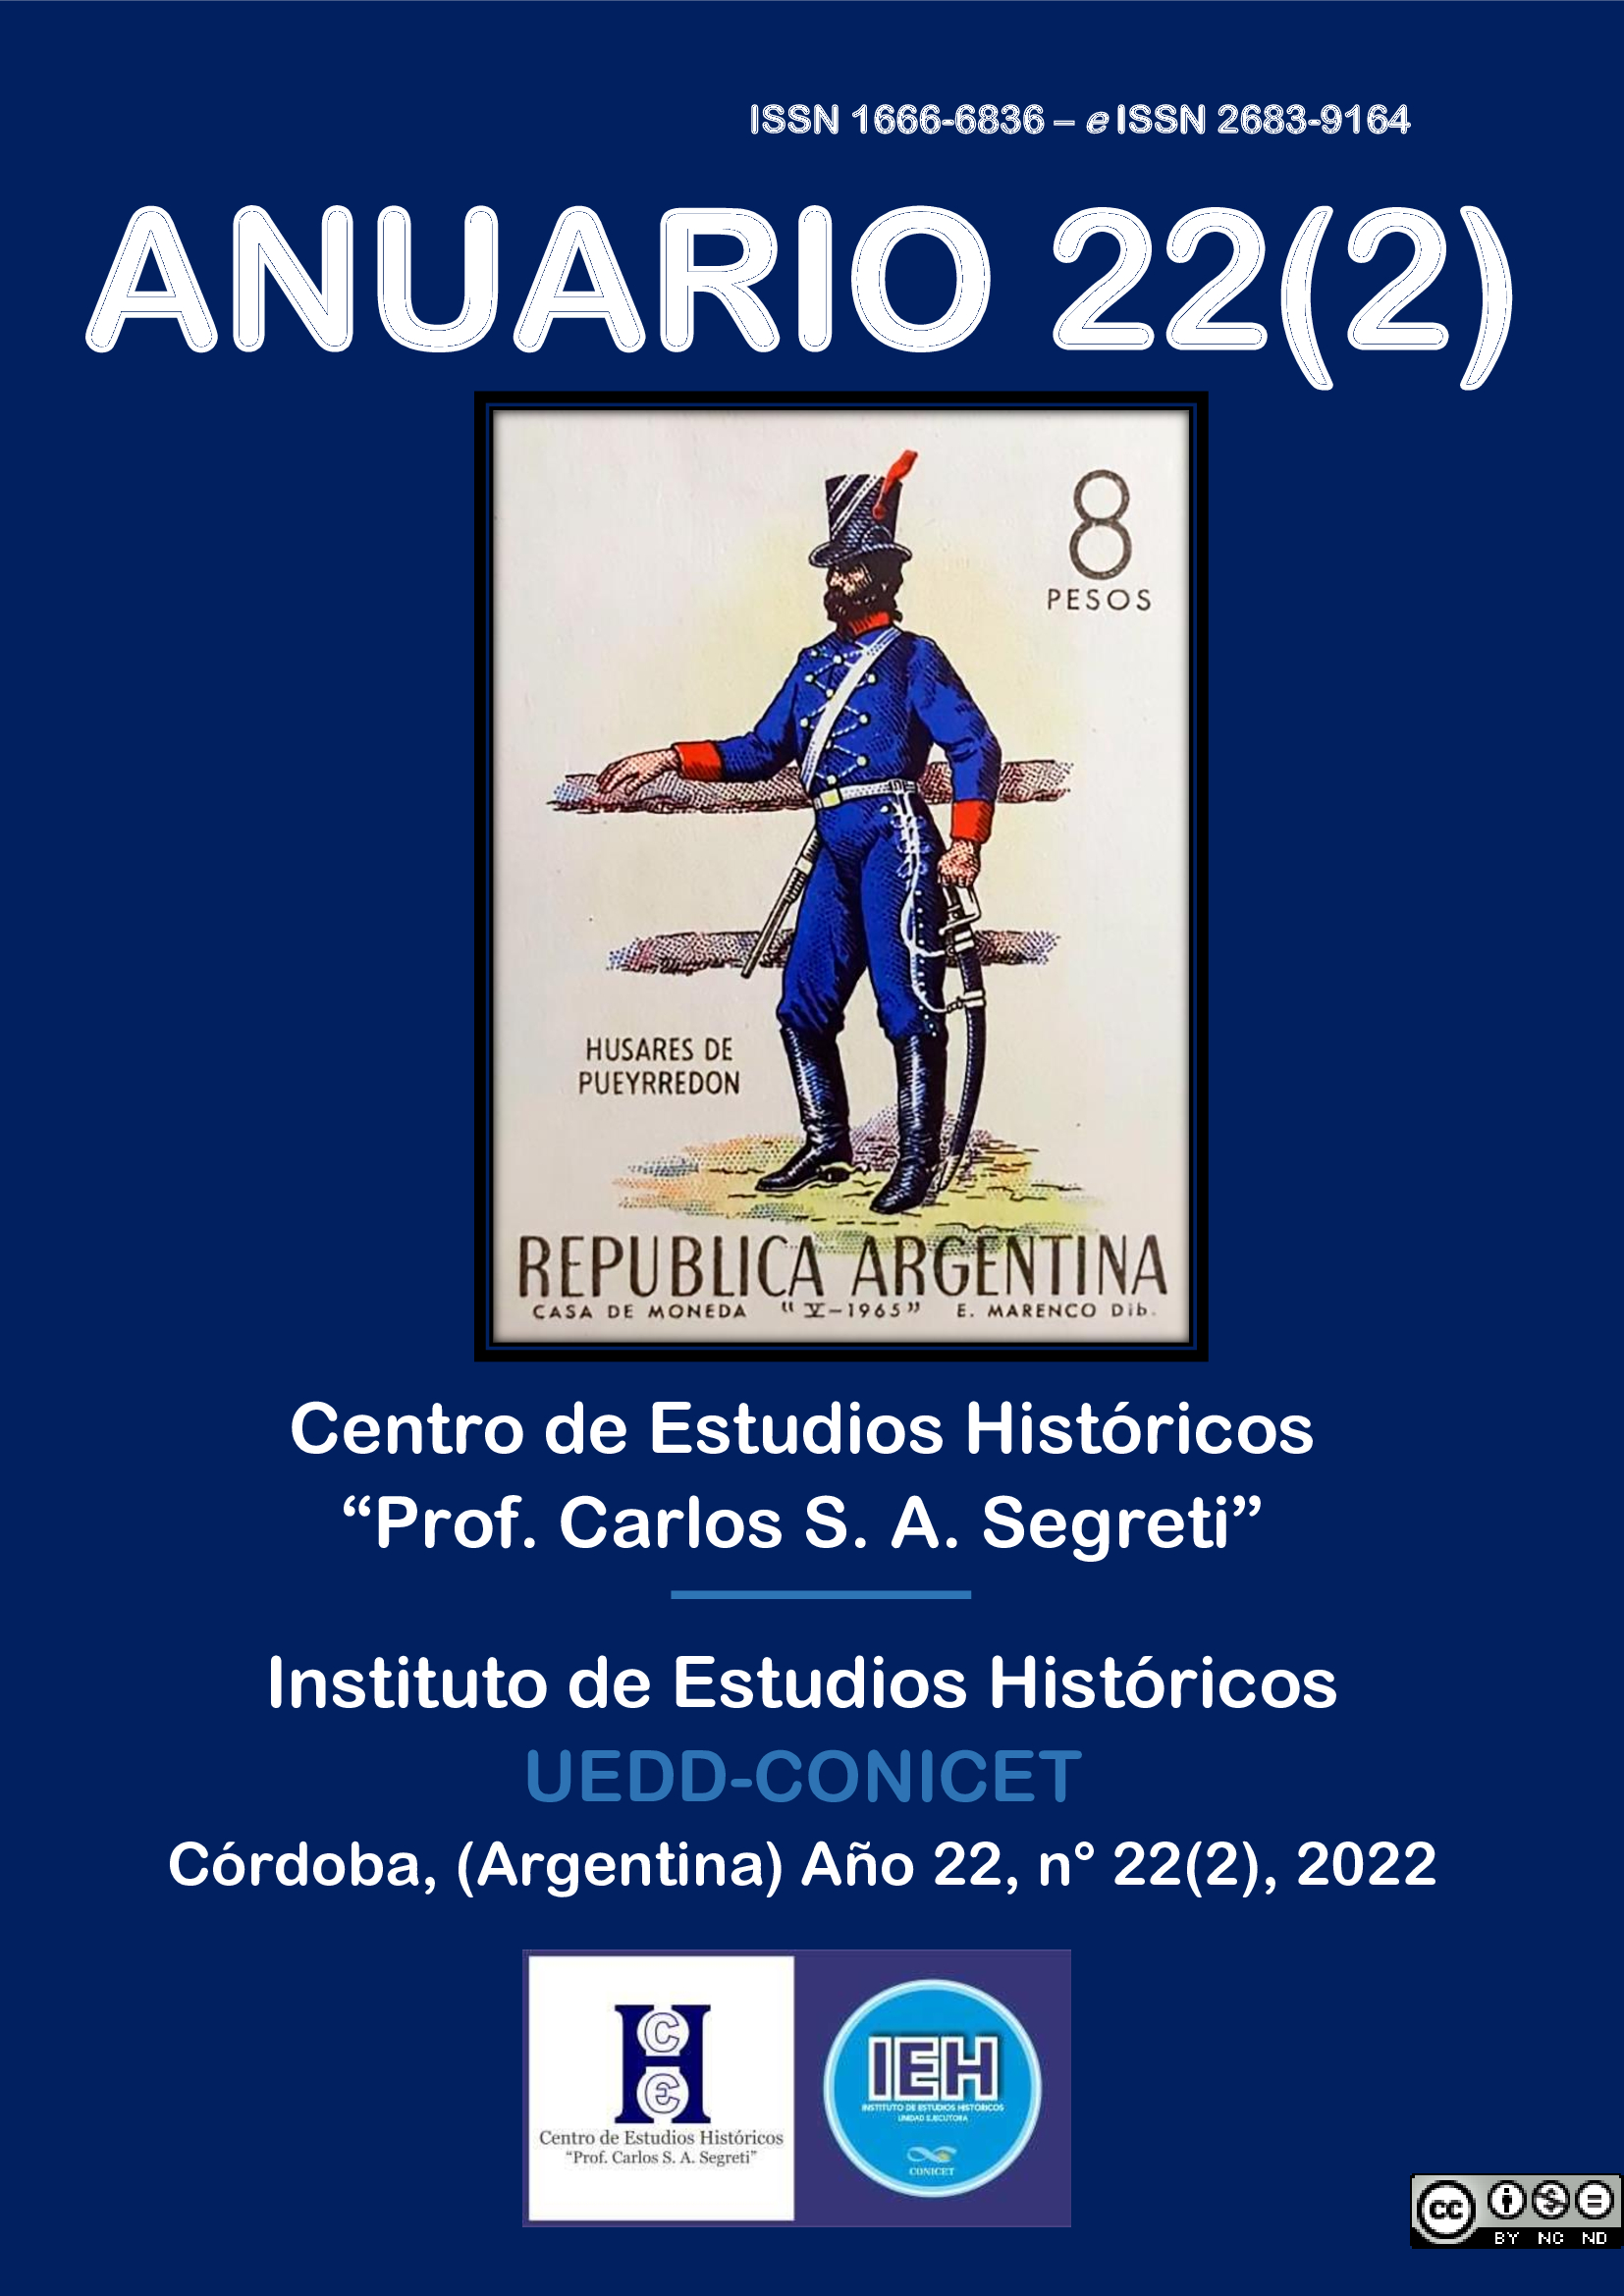 					Ver Vol. 2 Núm. 22 (2022): Anuario del Centro de Estudios Históricos "Prof. Carlos S. A. Segreti" 22(2)
				